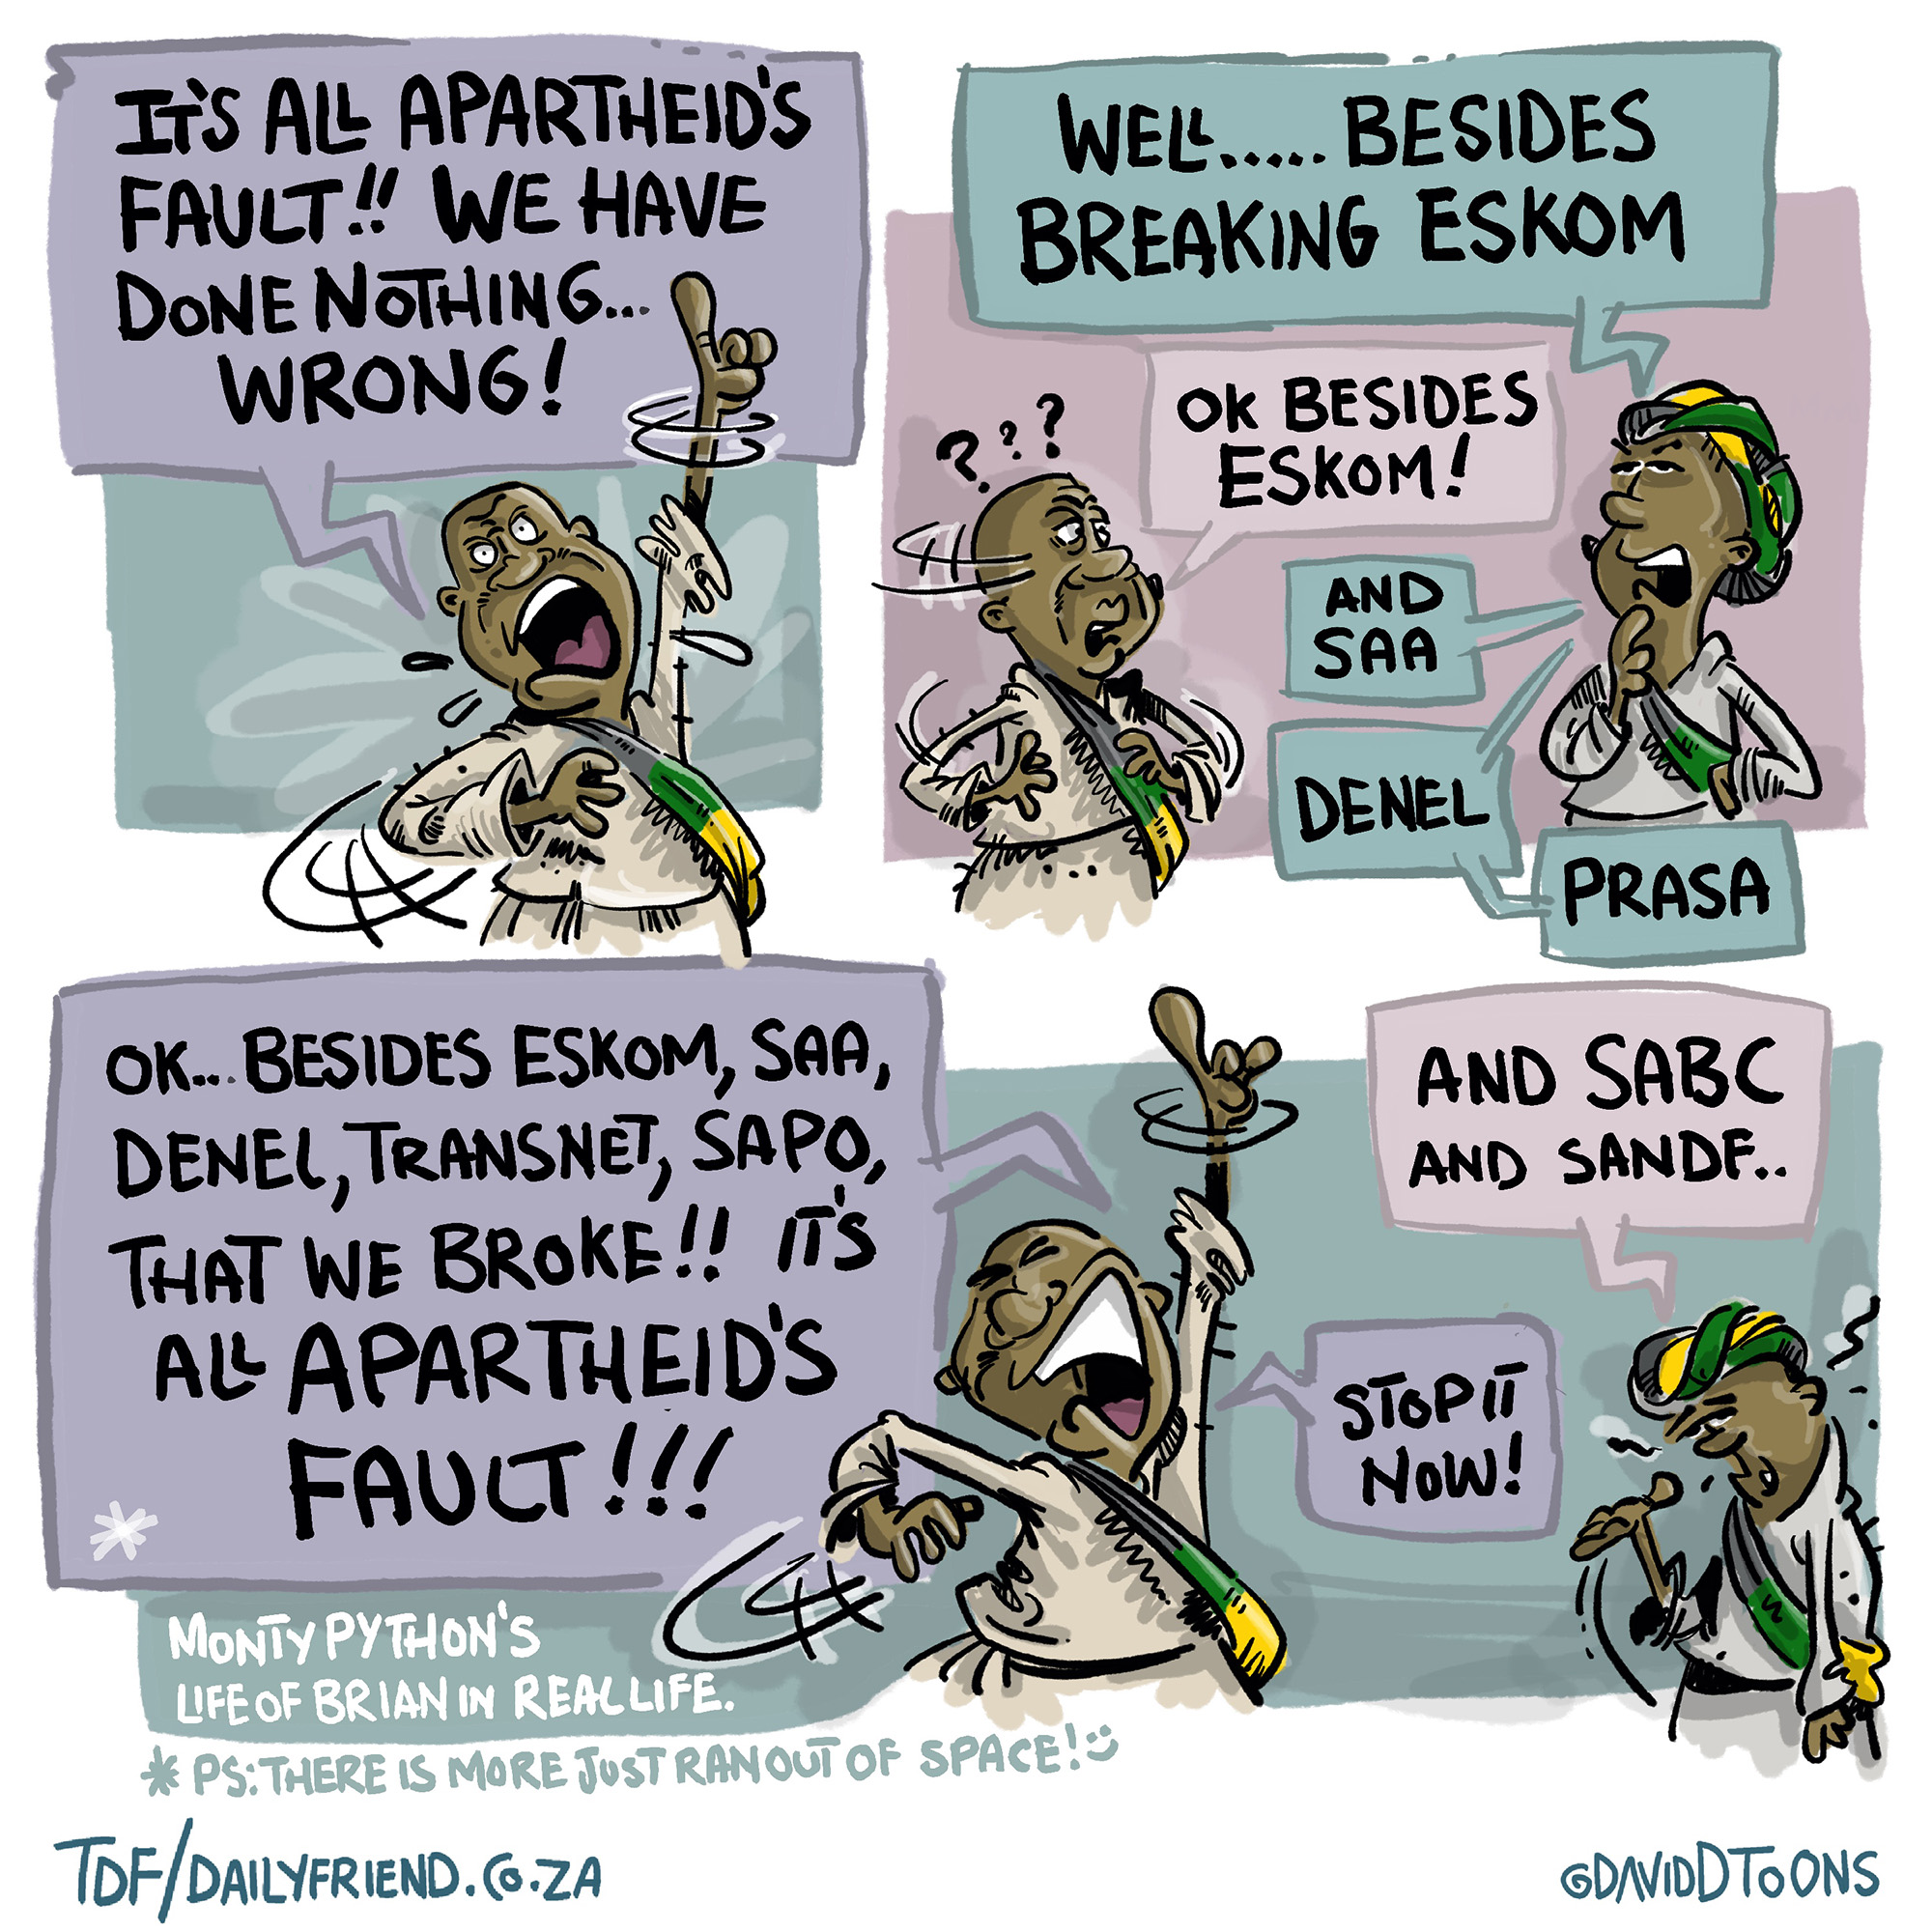 Apartheid’s fault